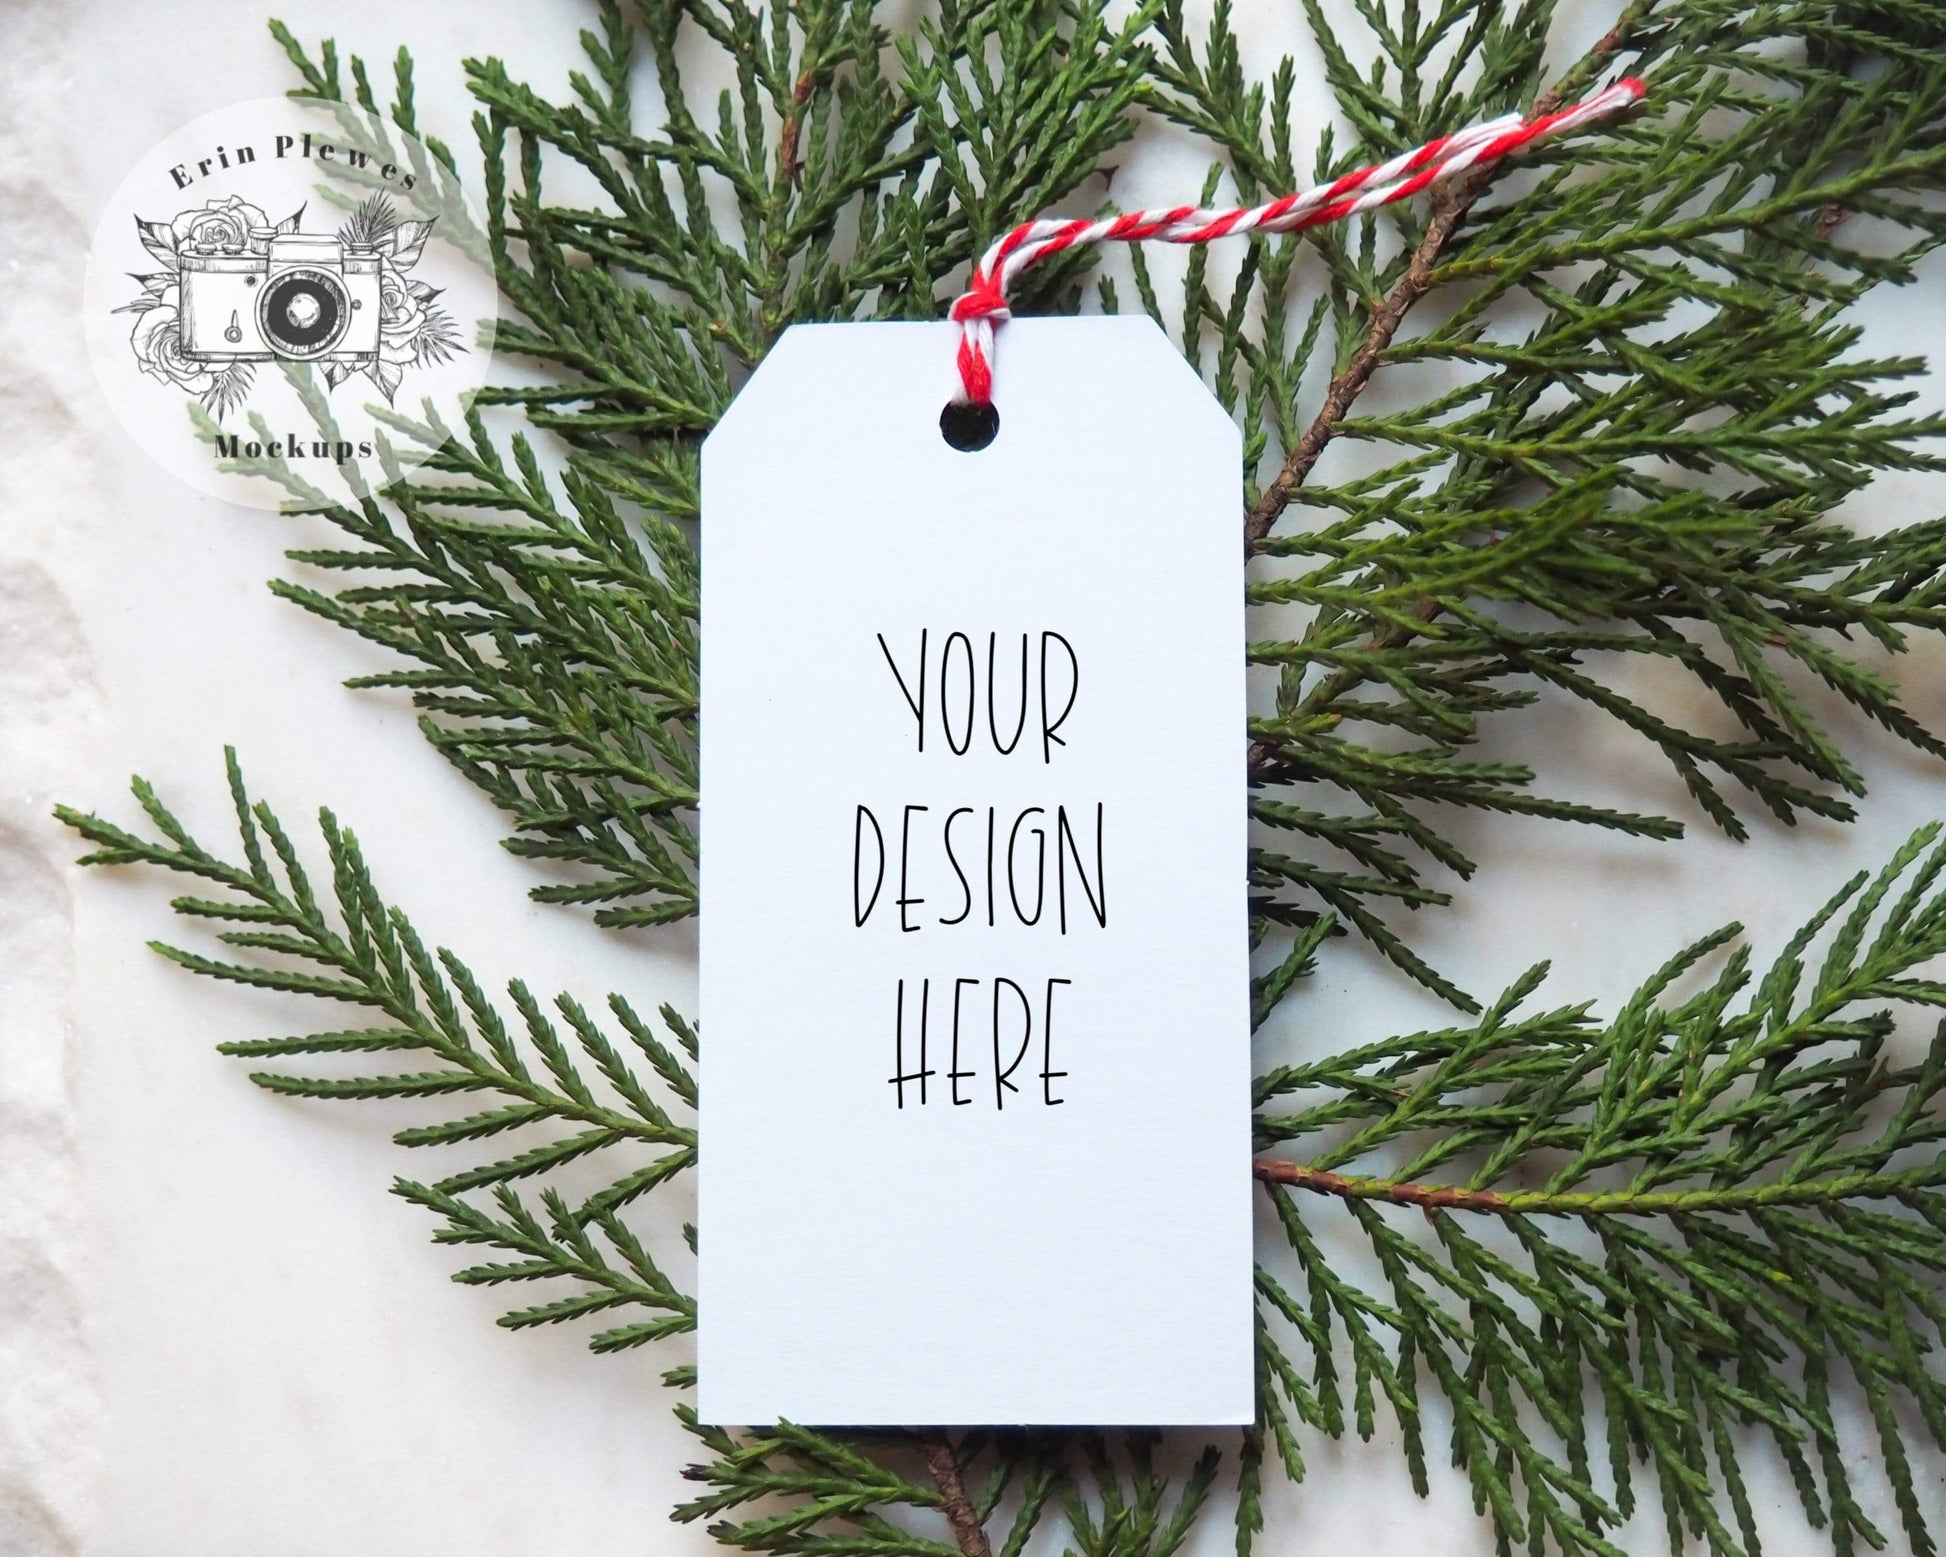 Christmas Gift Tags with Trees Printable Editable - Instant